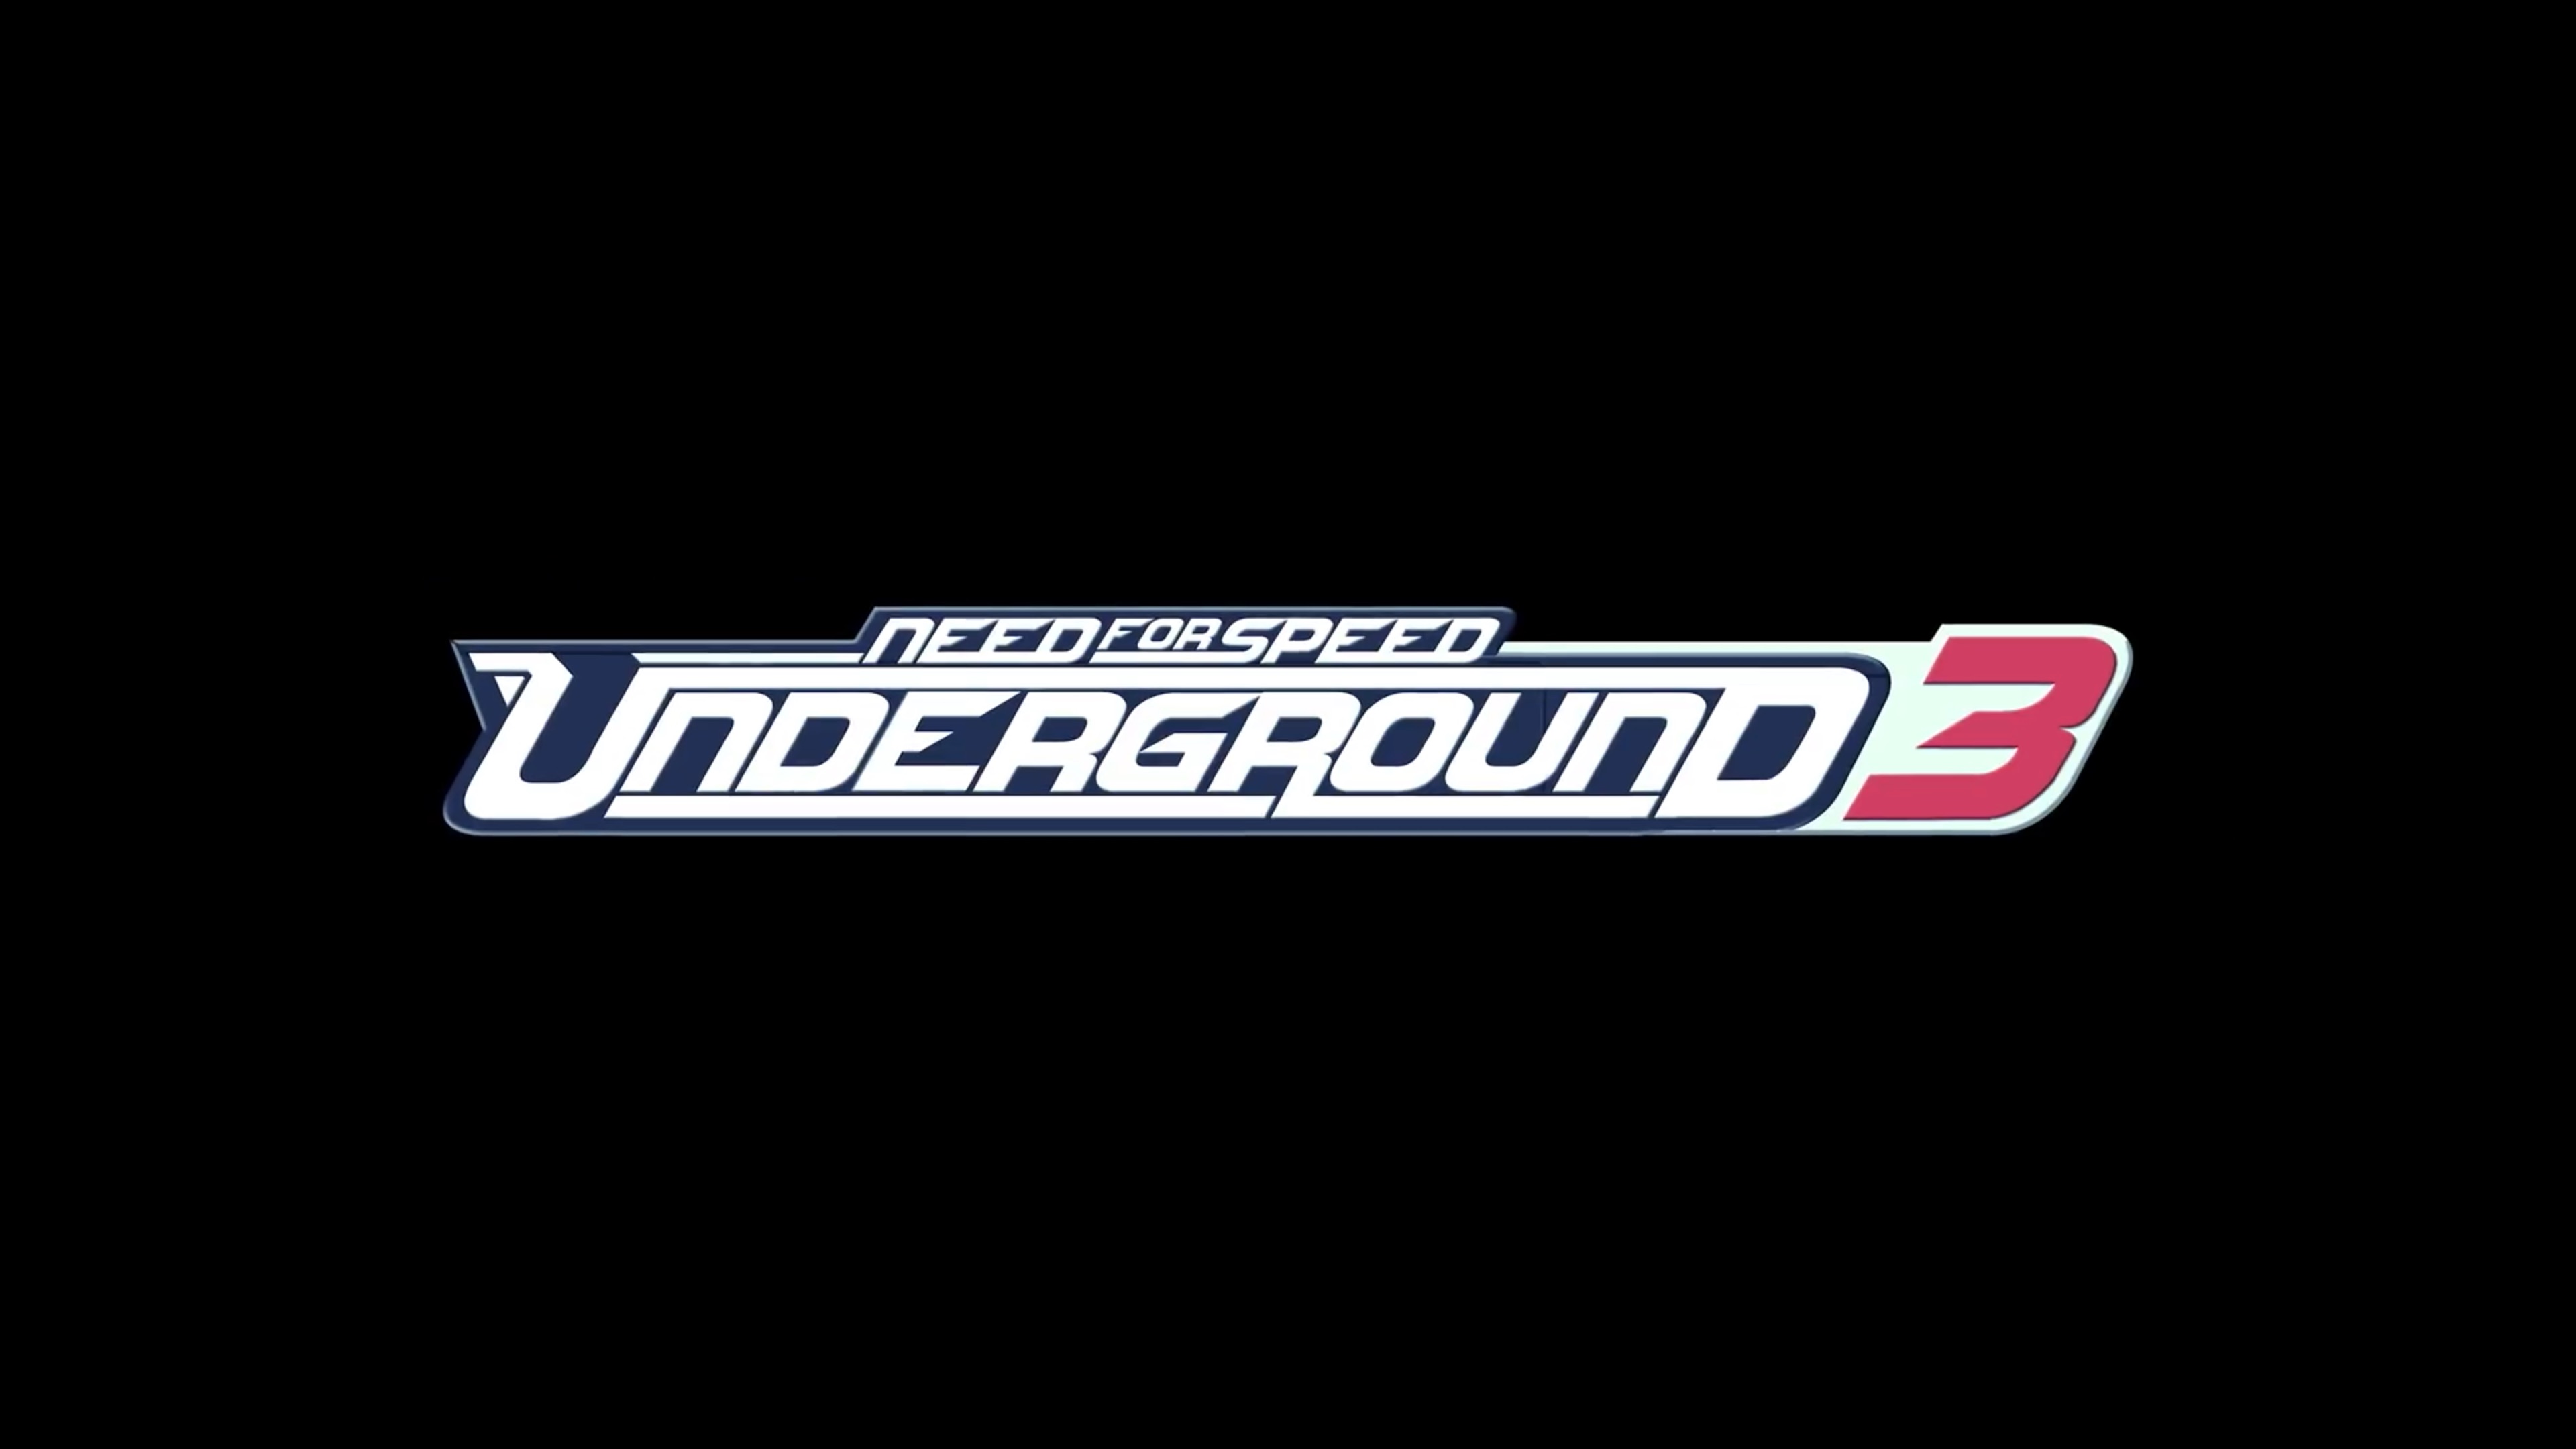 Need for Speed Underground 3